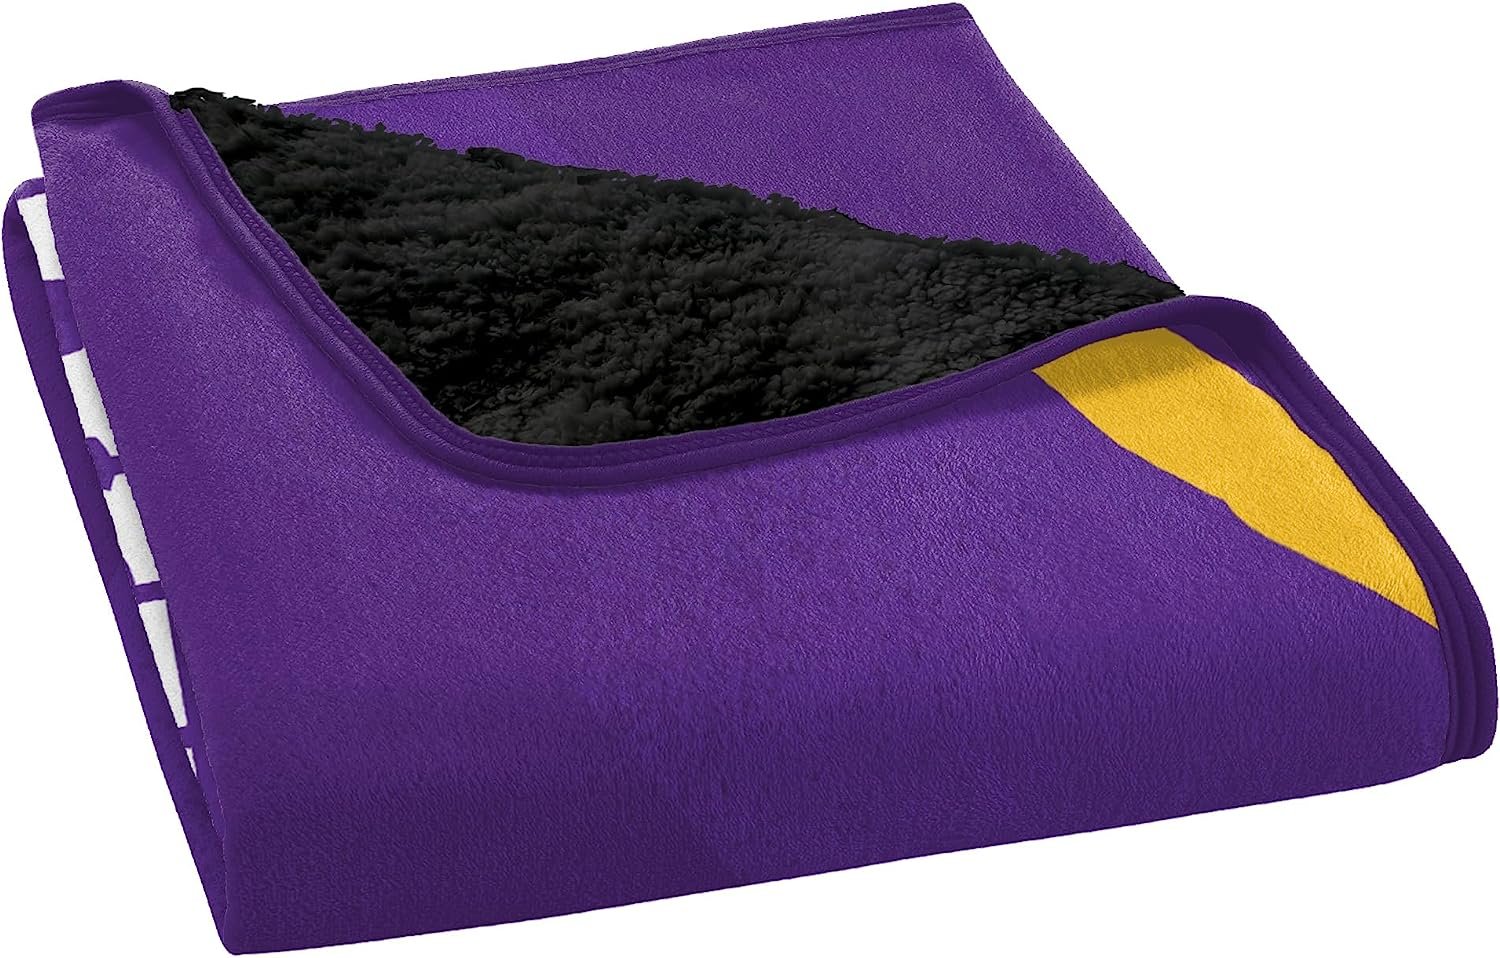 Minnesota Vikings Throw Blanket, Sherpa Raschel Polyester, Silk Touch Style, Velocity Design, 50x60 Inch